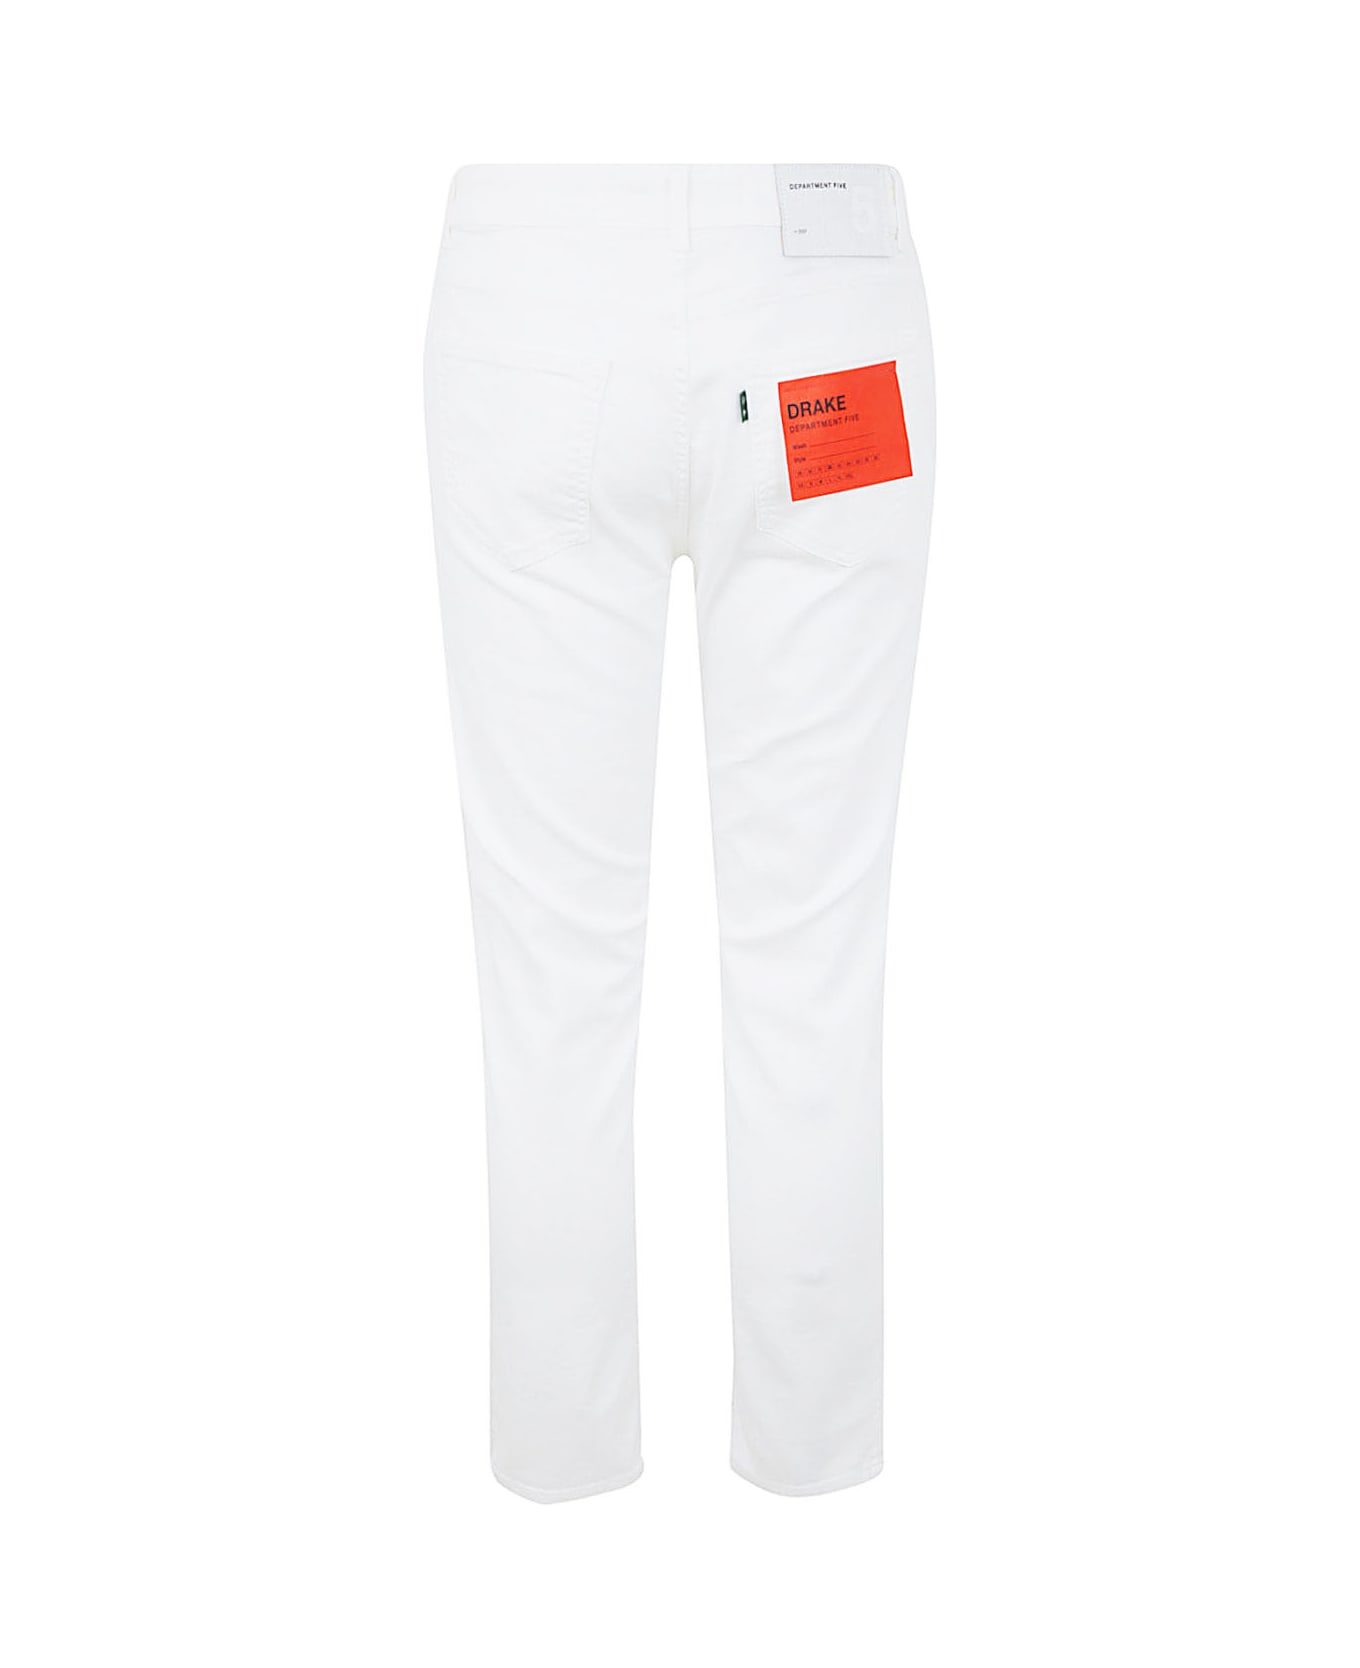 Department Five Drake Skinny Jeans - White デニム